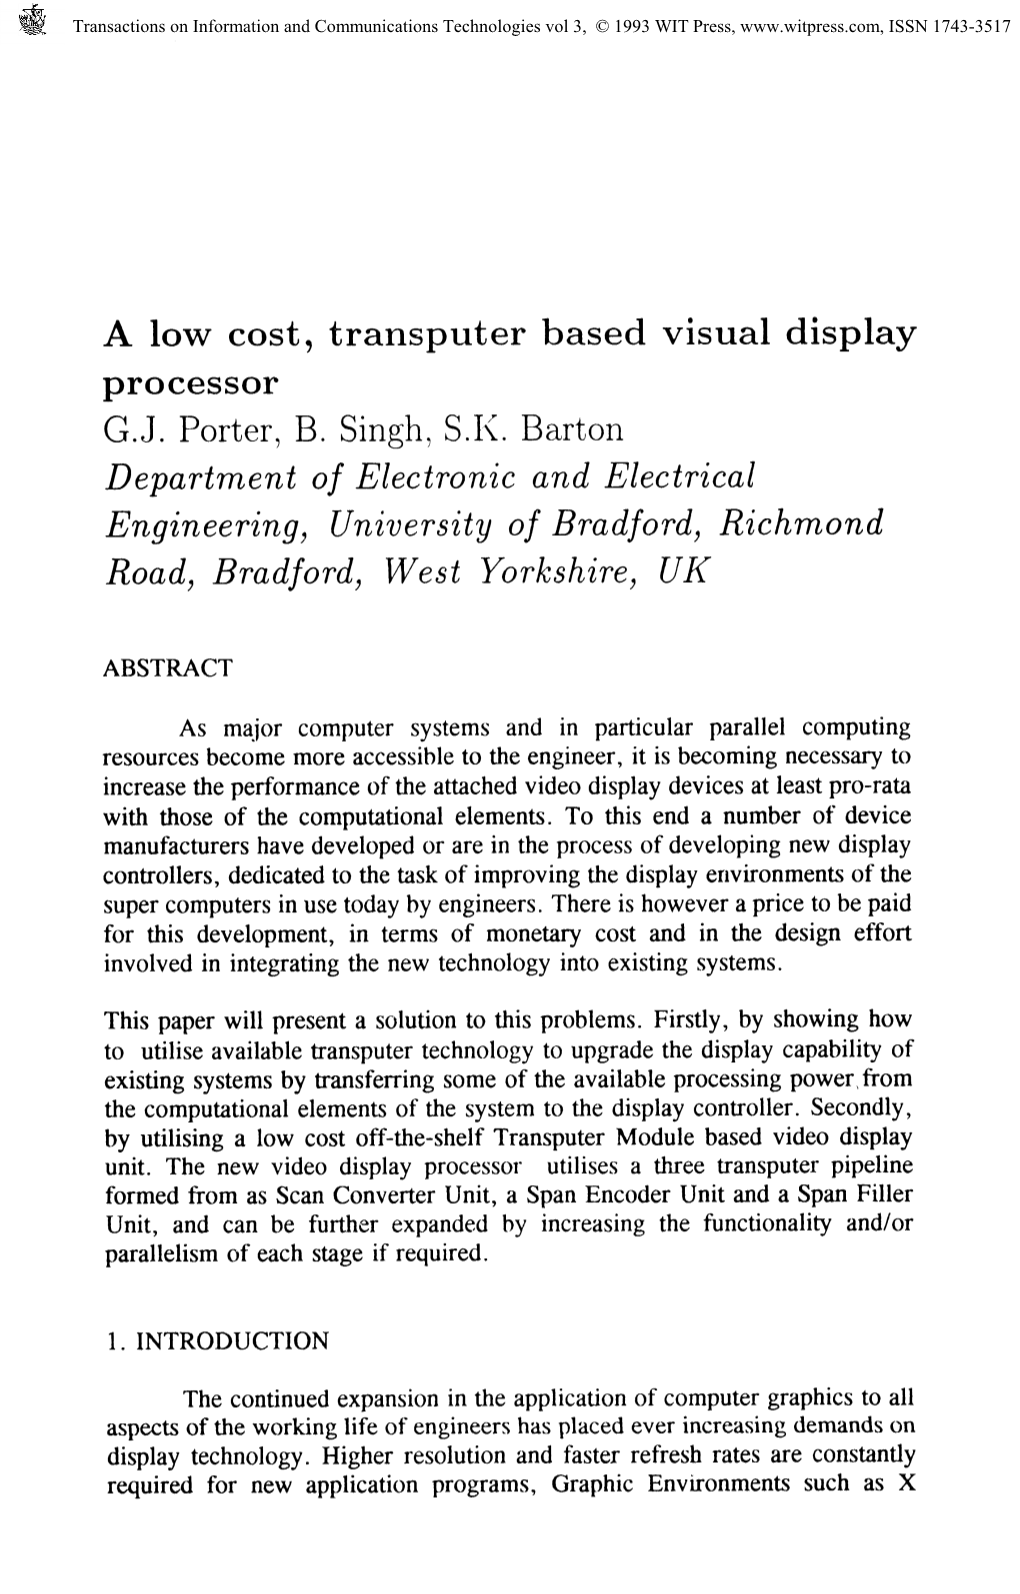 A Low Cost, Transputer Based Visual Display Processor G.J. Porter, B